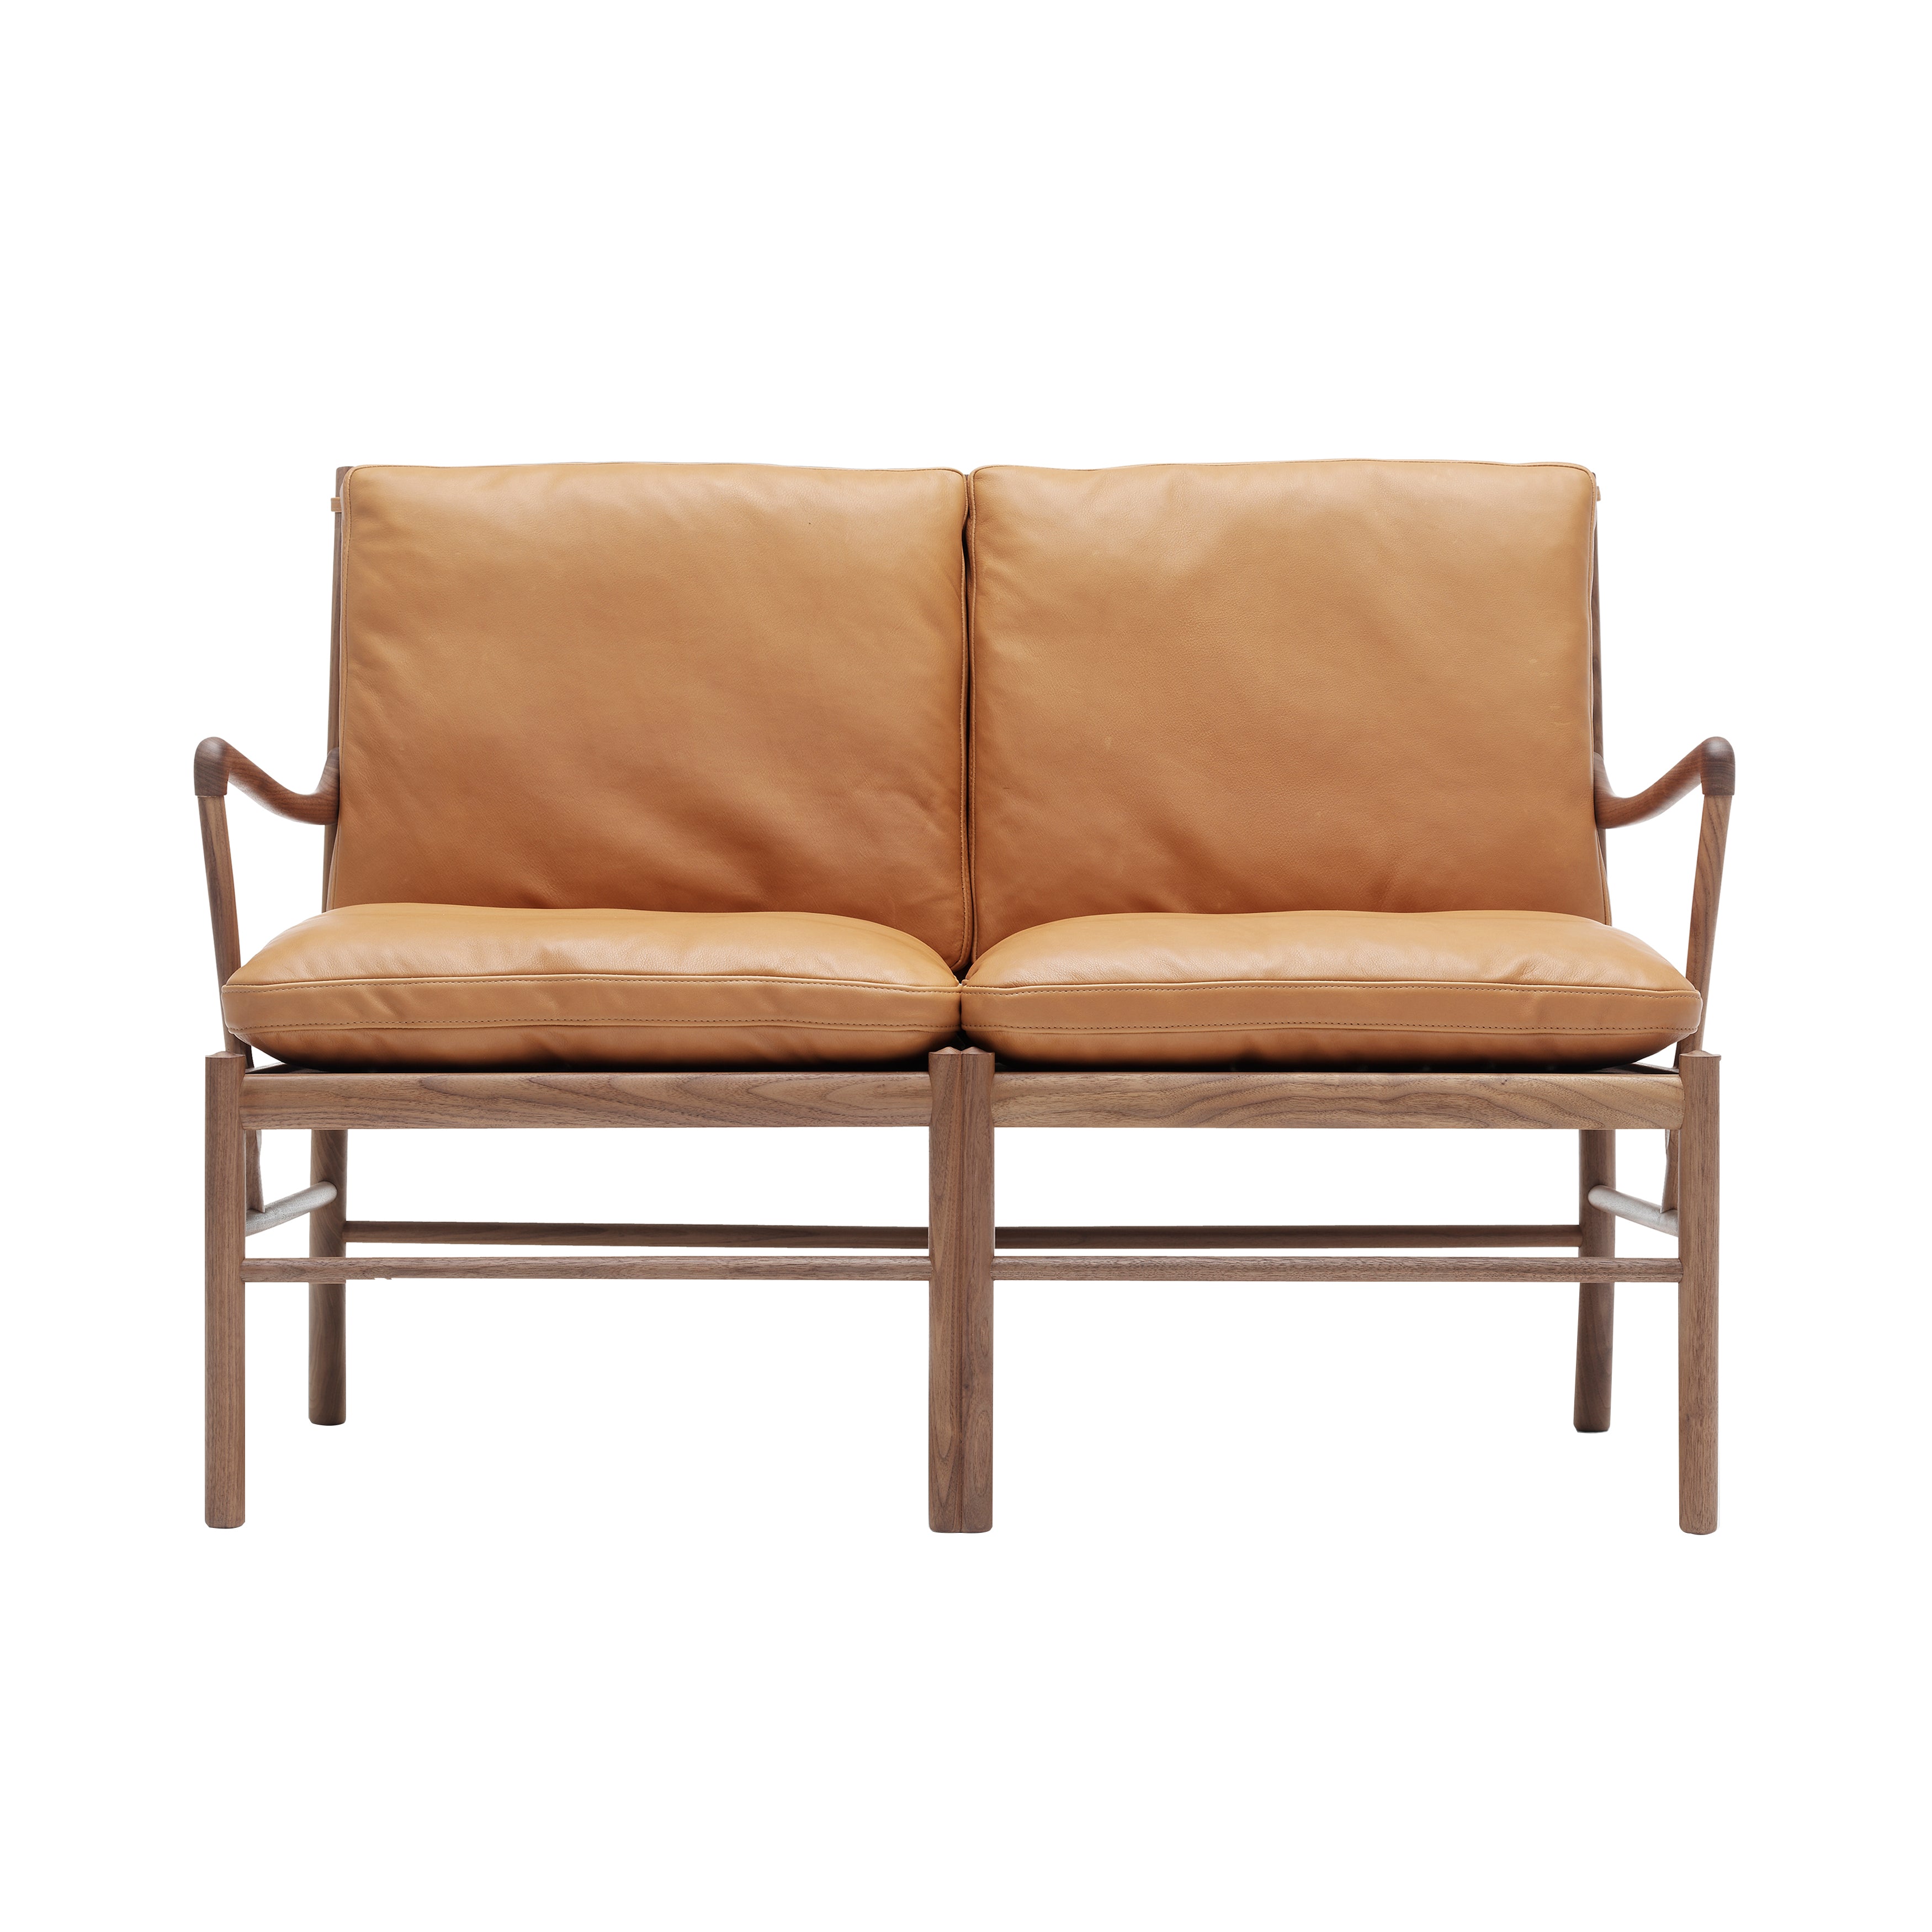 OW149-2 Colonial Sofa: Oiled Walnut